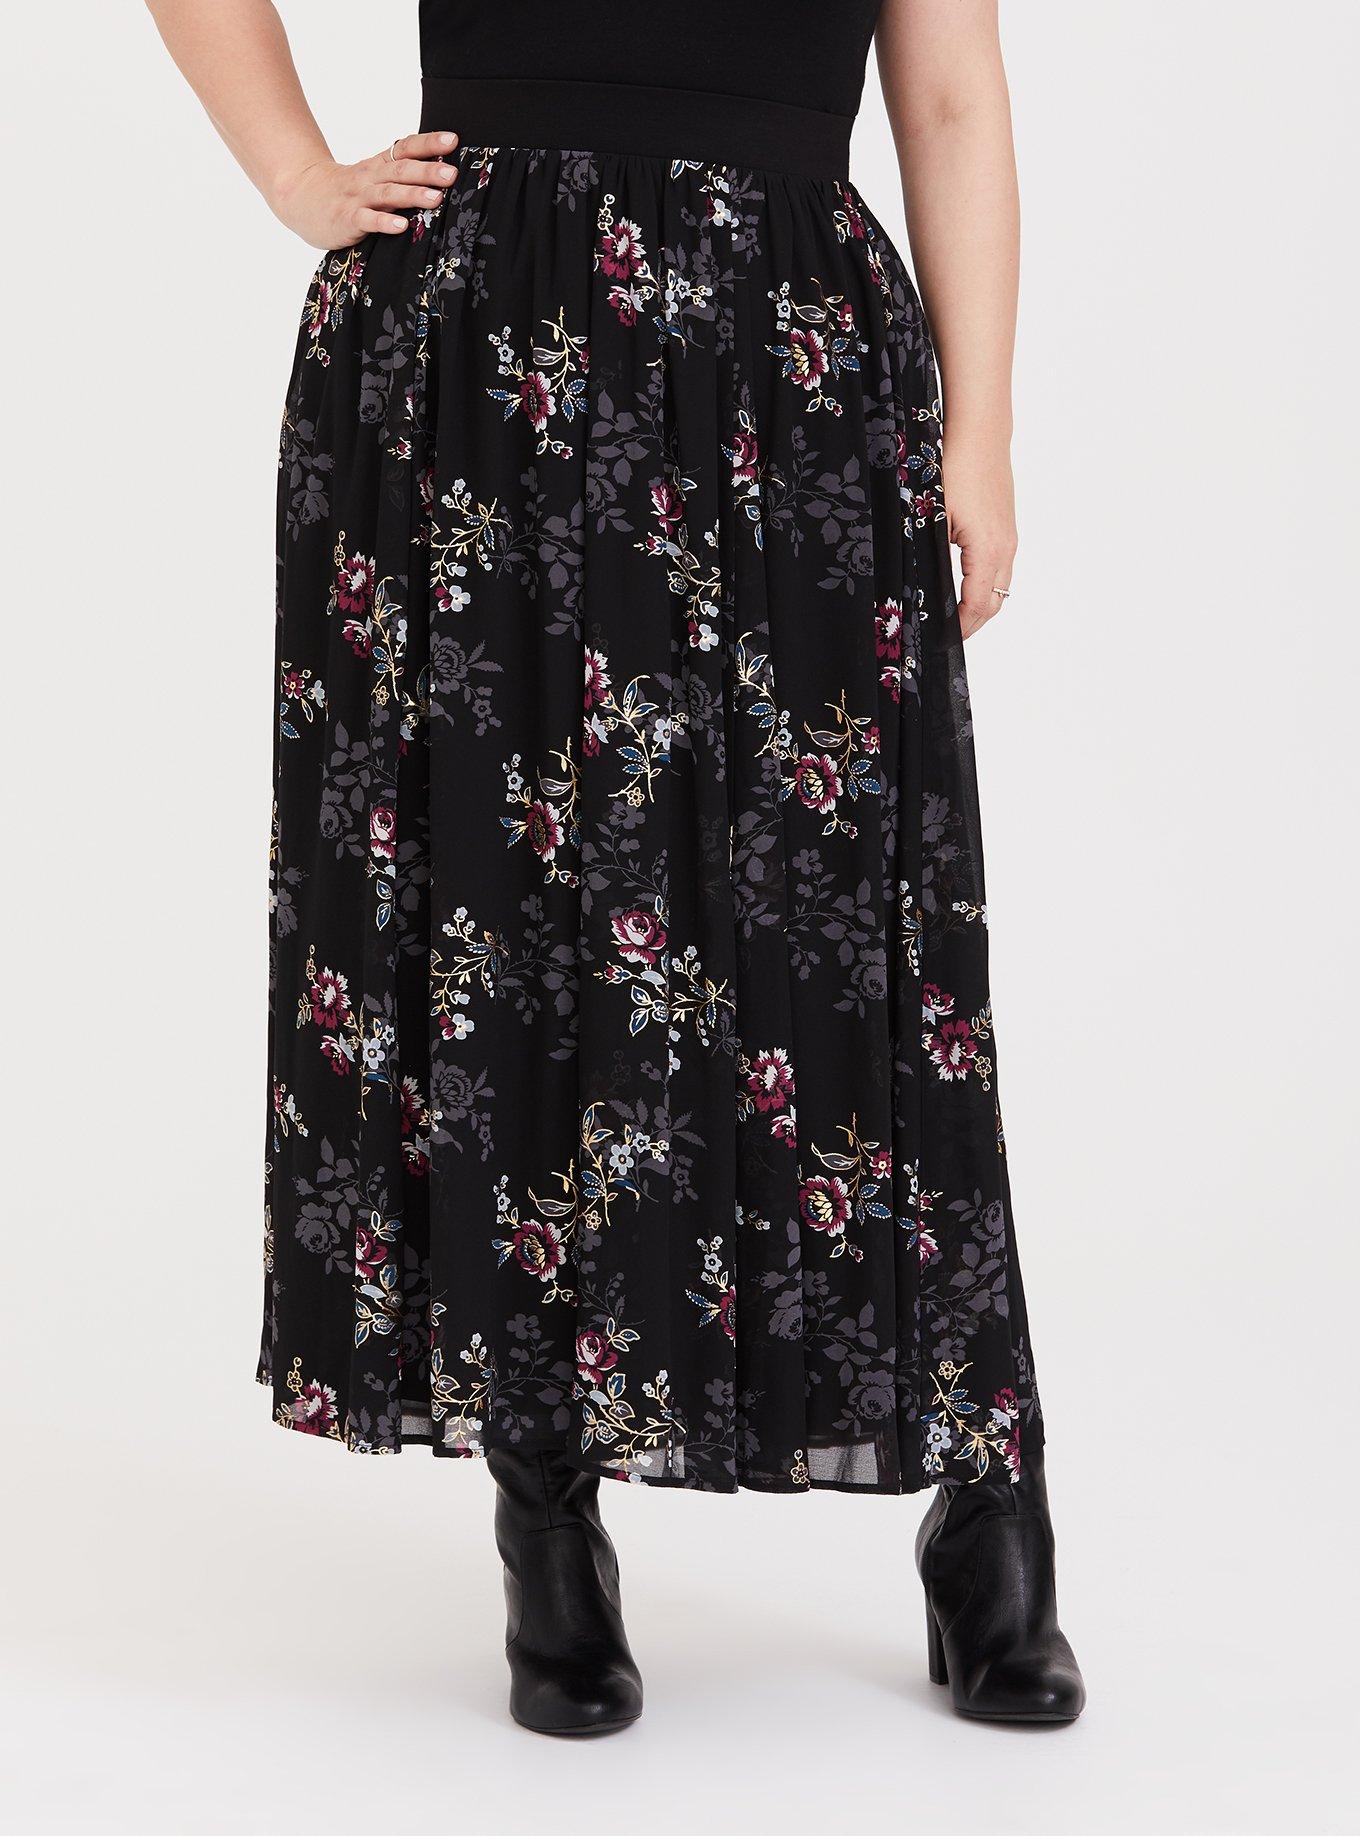 Plus Size - Black Floral Chiffon Maxi Skirt - Torrid